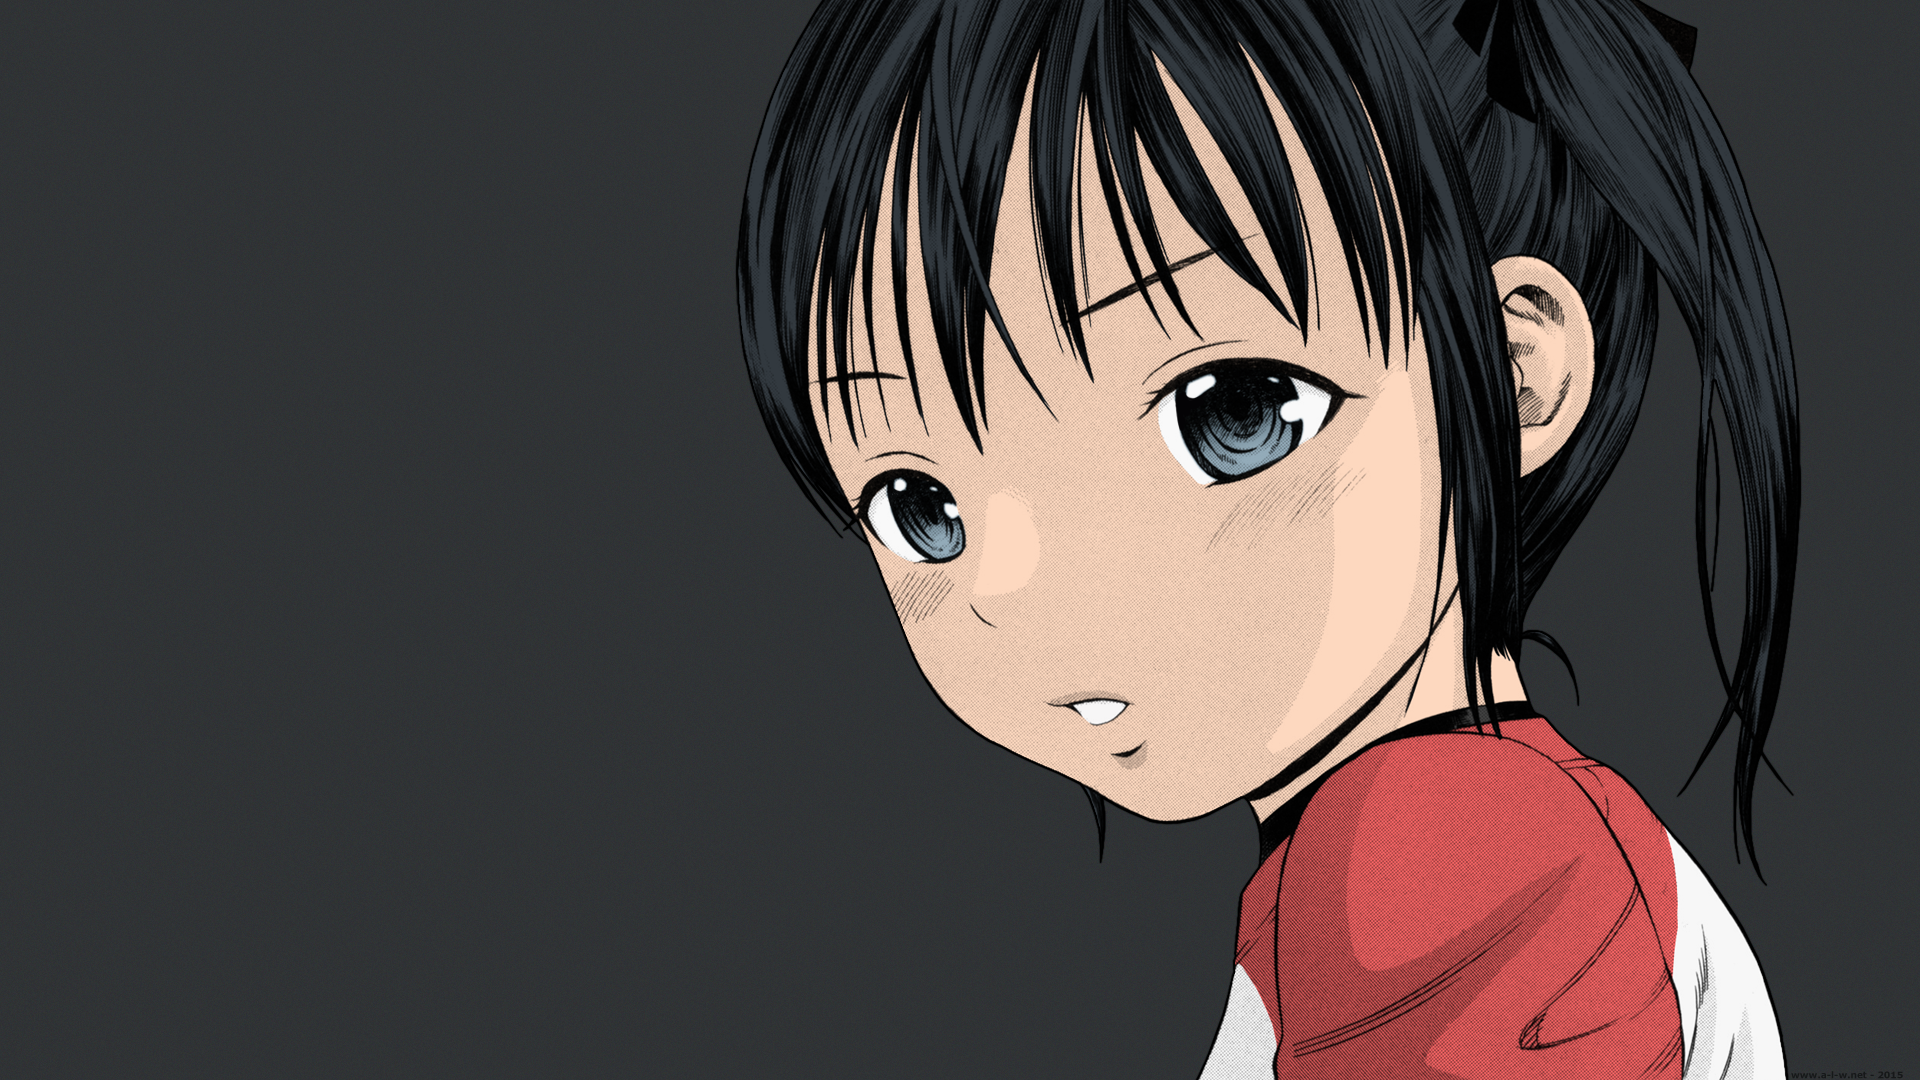 Anime 1920x1080 anime girls manga ponytail portrait short hair dark hair tomboys anime simple background dark eyes face